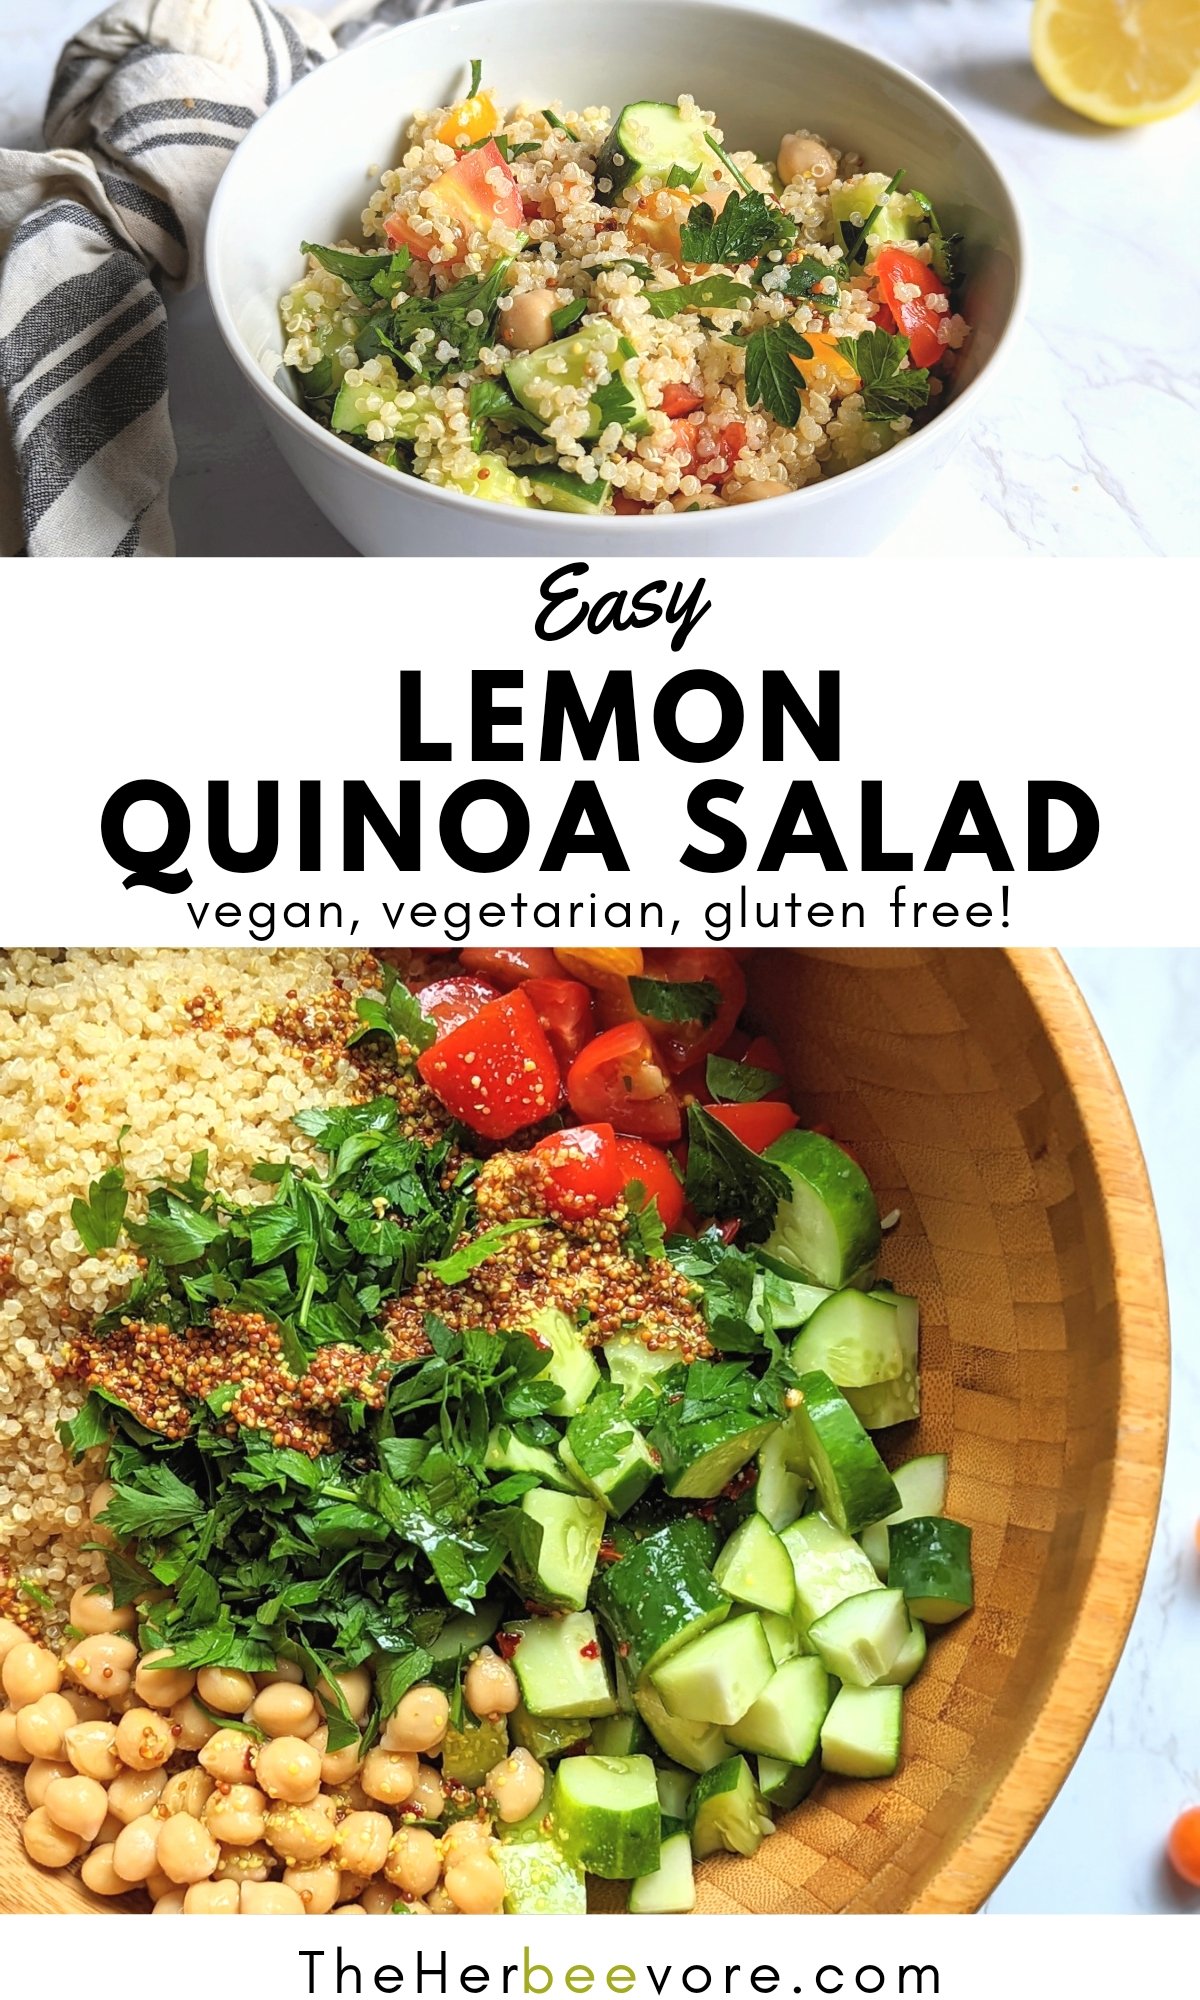 lemon quinoa salad vegan gluten free vegetarian meatless bbq side dish recipes summer sides party barbeque potluck side dish vegan vegetarian healthy